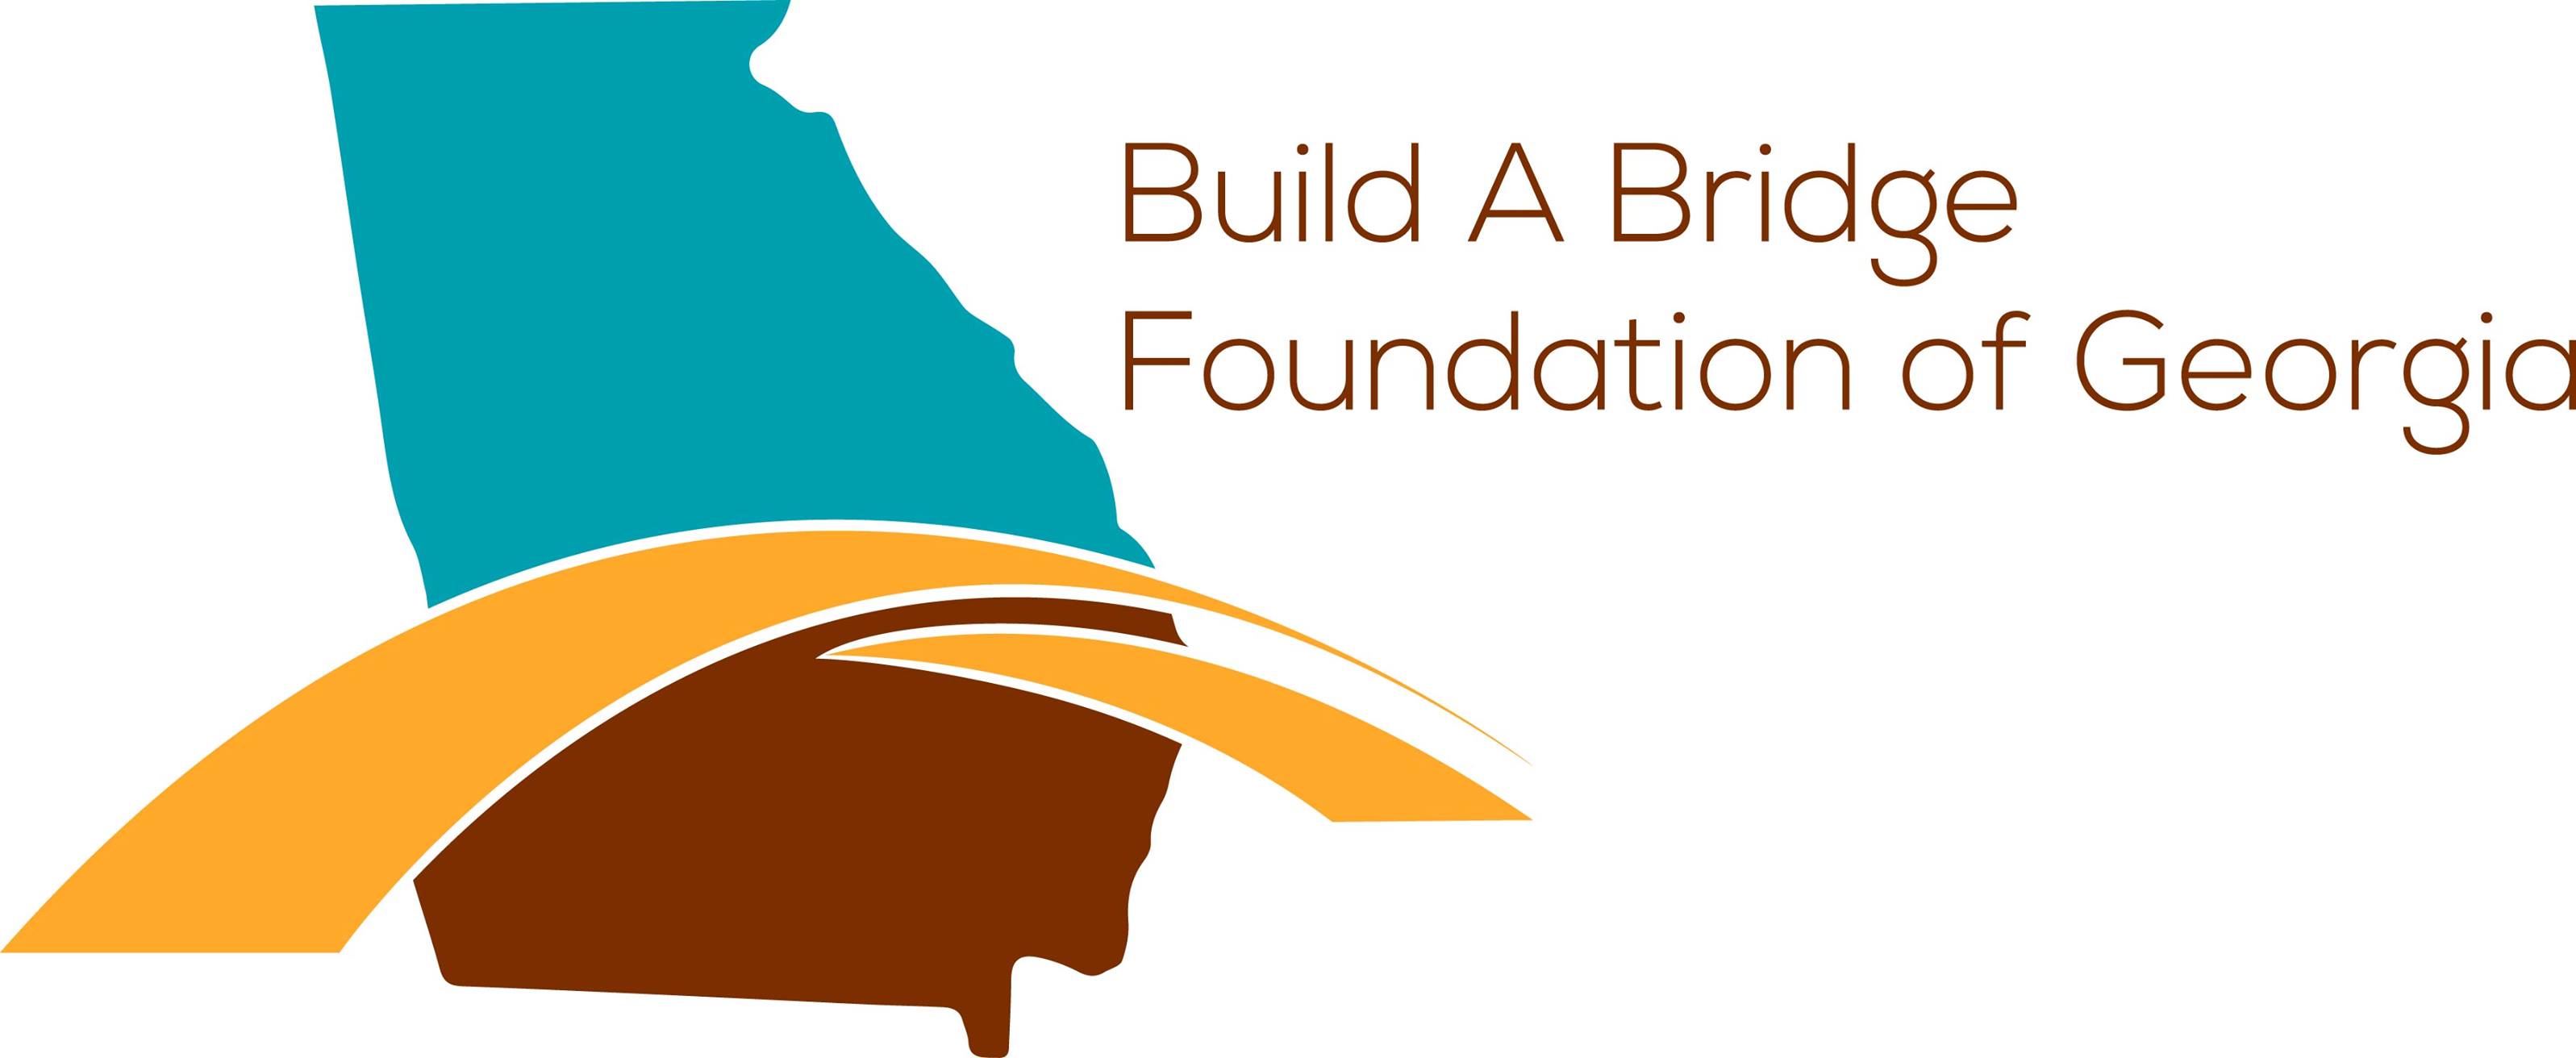 Build A Bridge Foundation